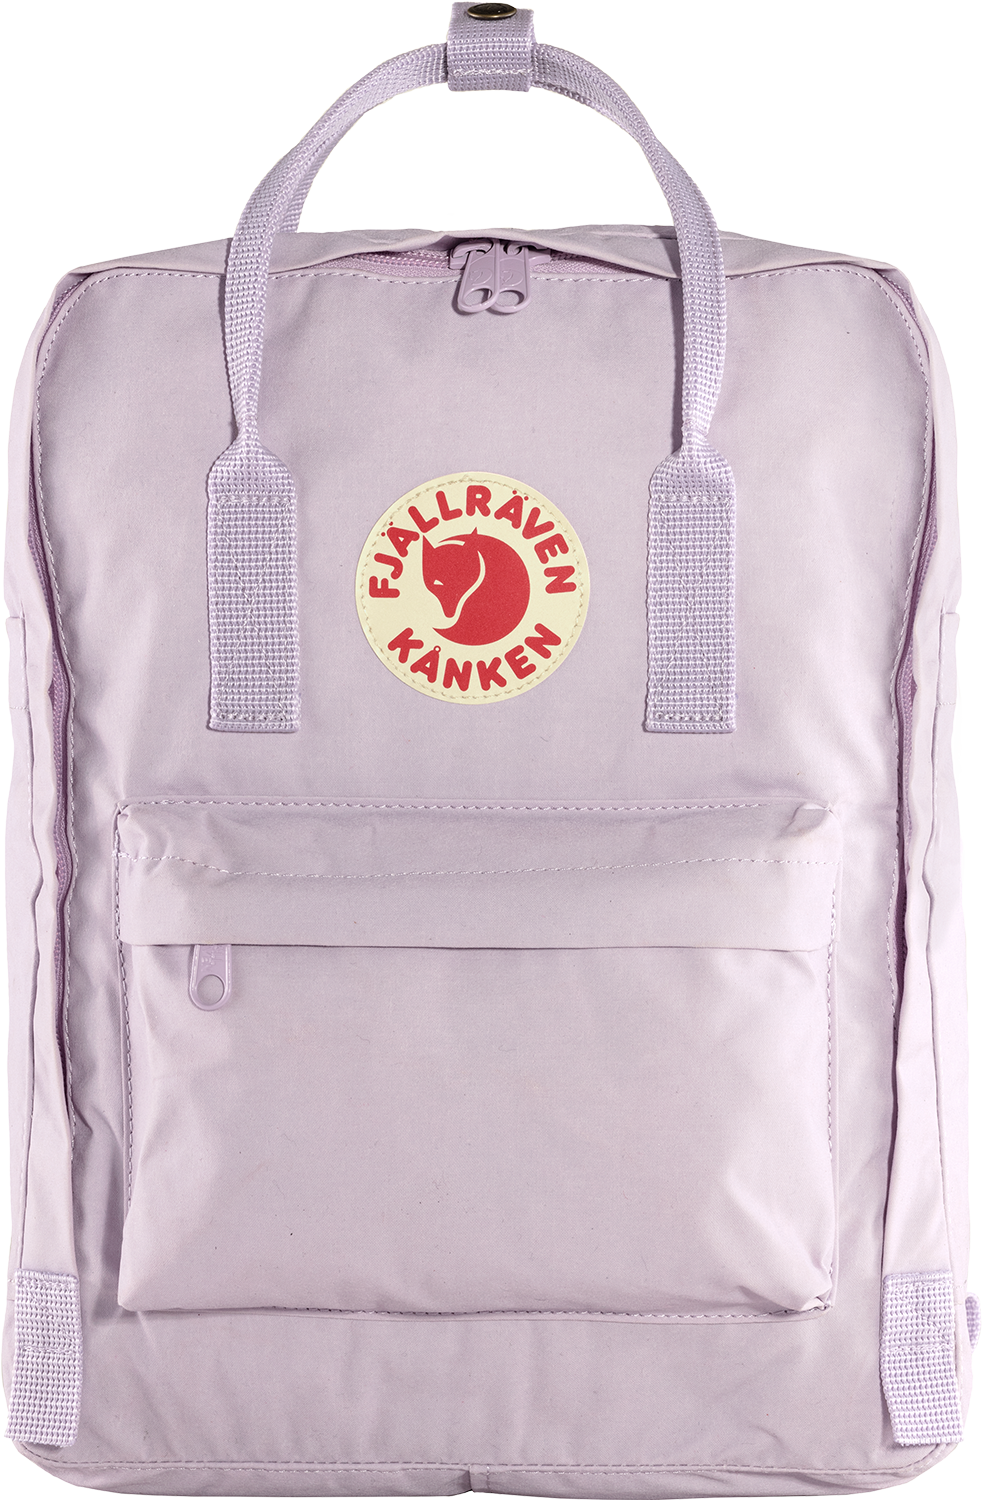 Light Oak branded kanken backpack